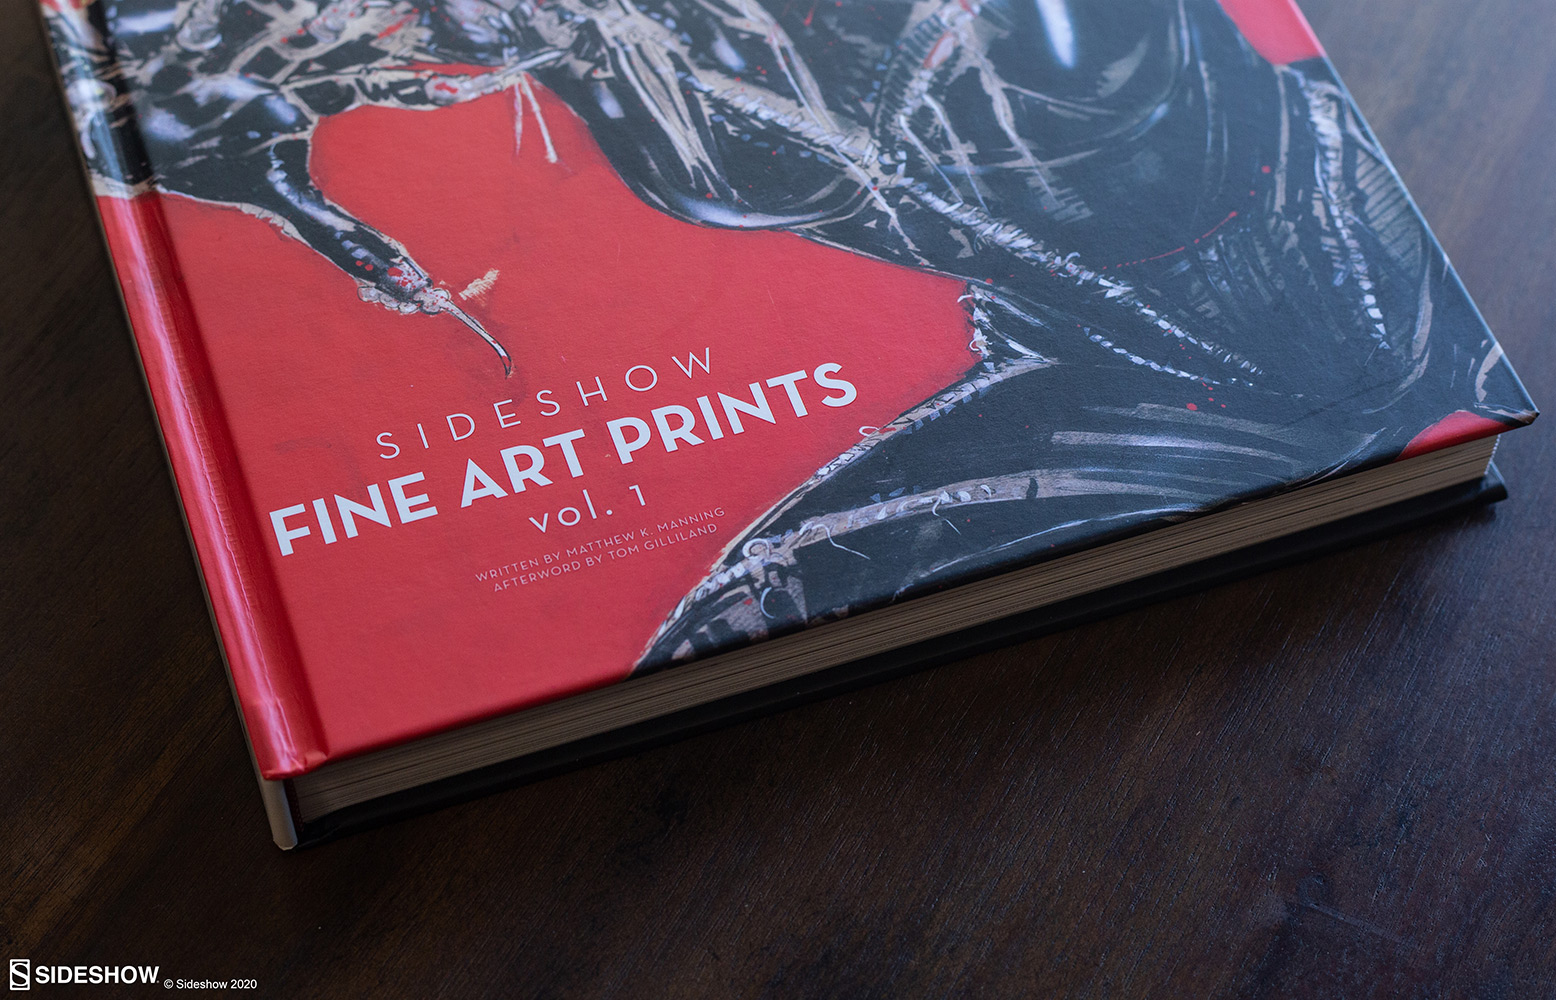 Sideshow: Fine Art Prints Vol. 1